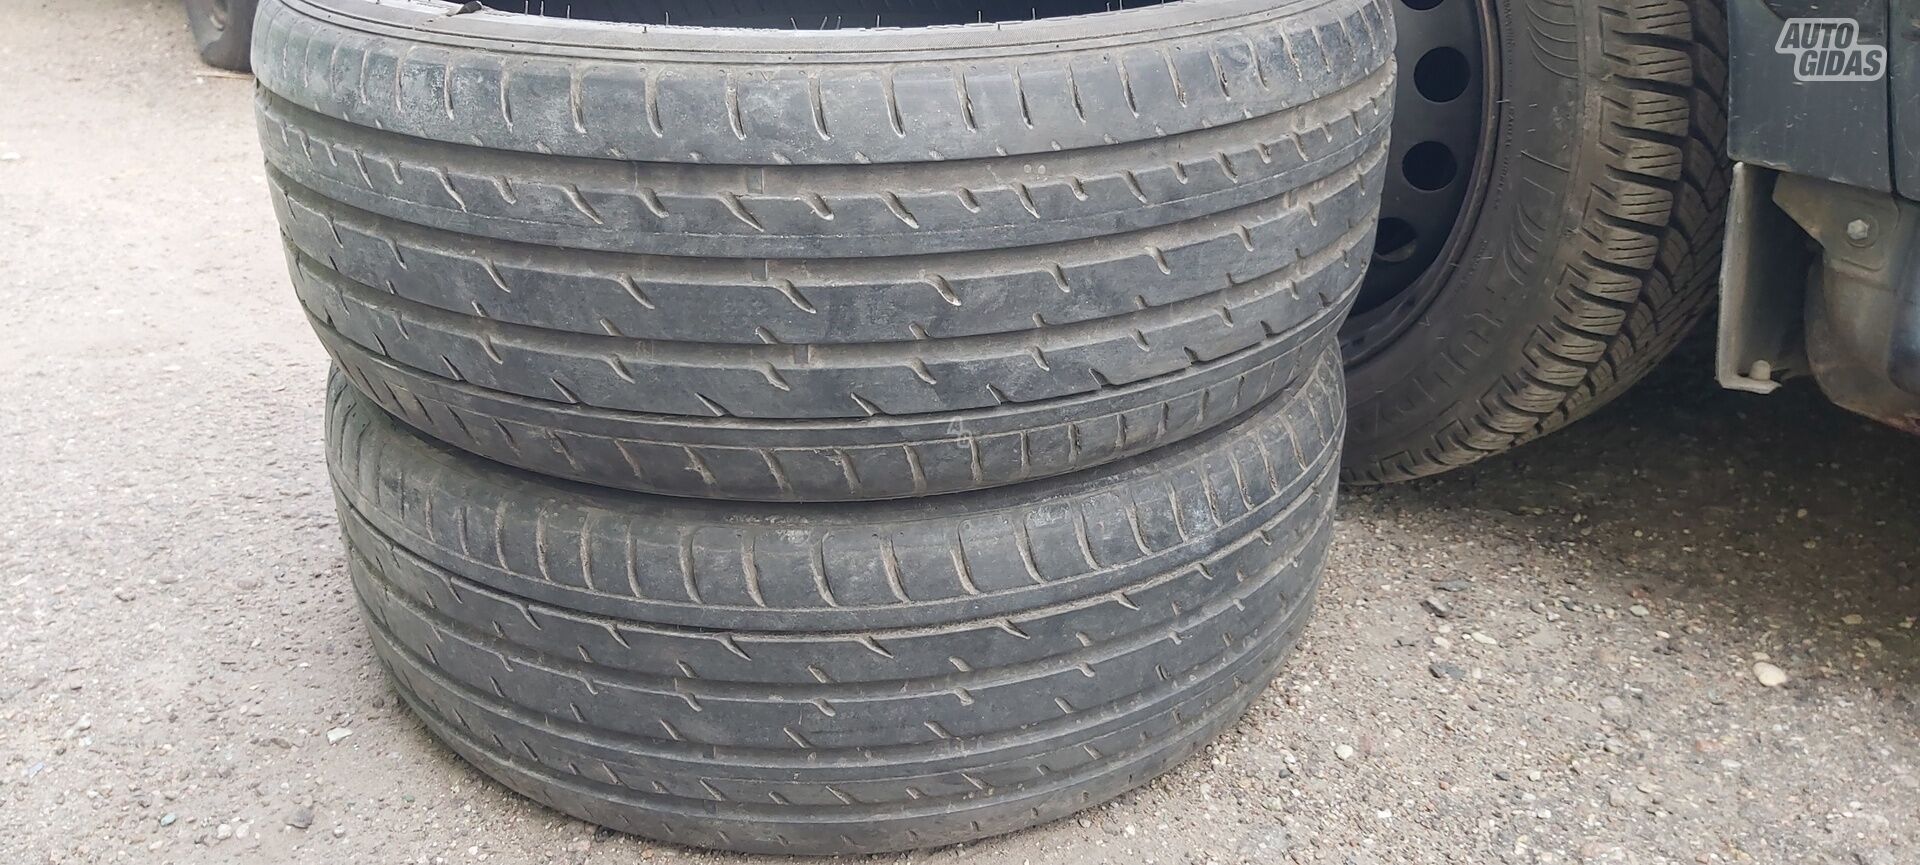 Haida R18 summer tyres passanger car